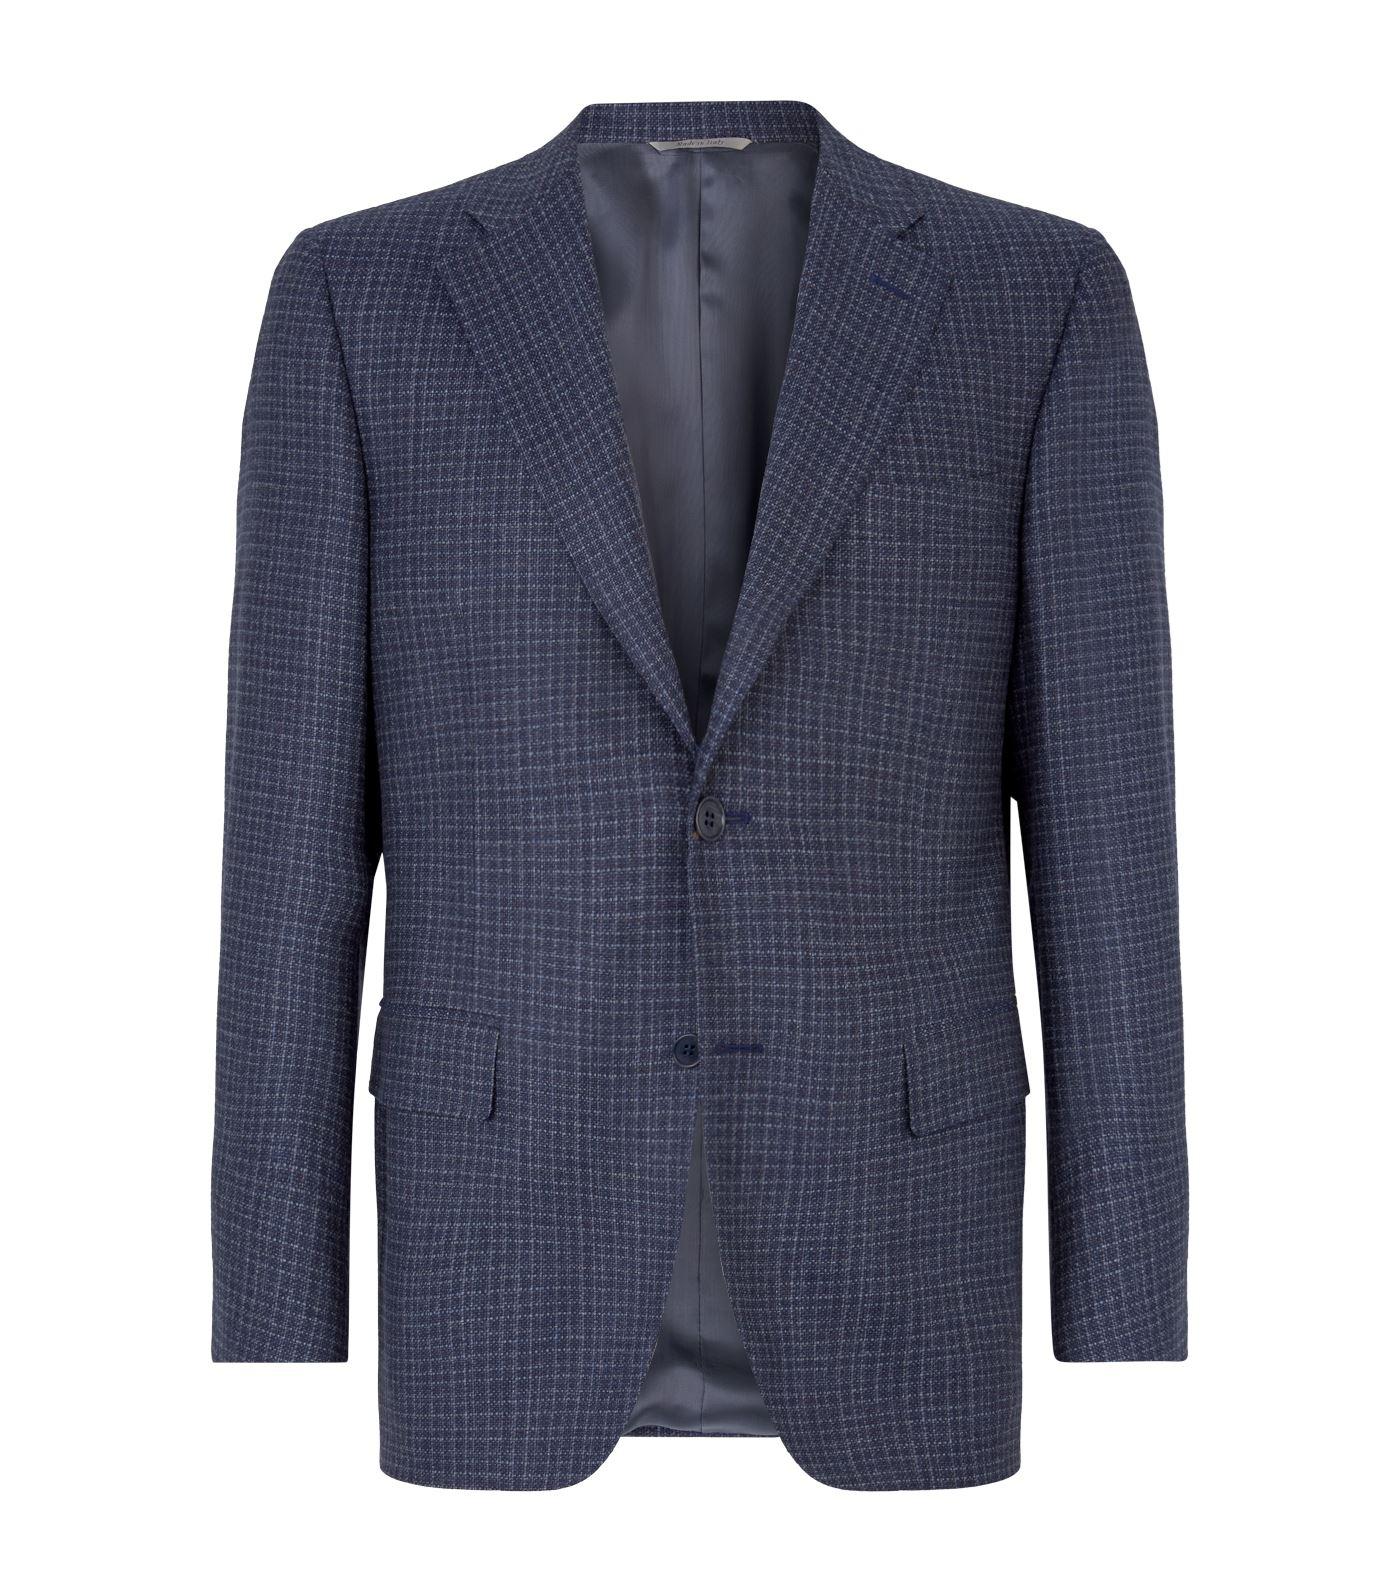 Canali Cashmere Wool Blazer in Blue for Men - Lyst